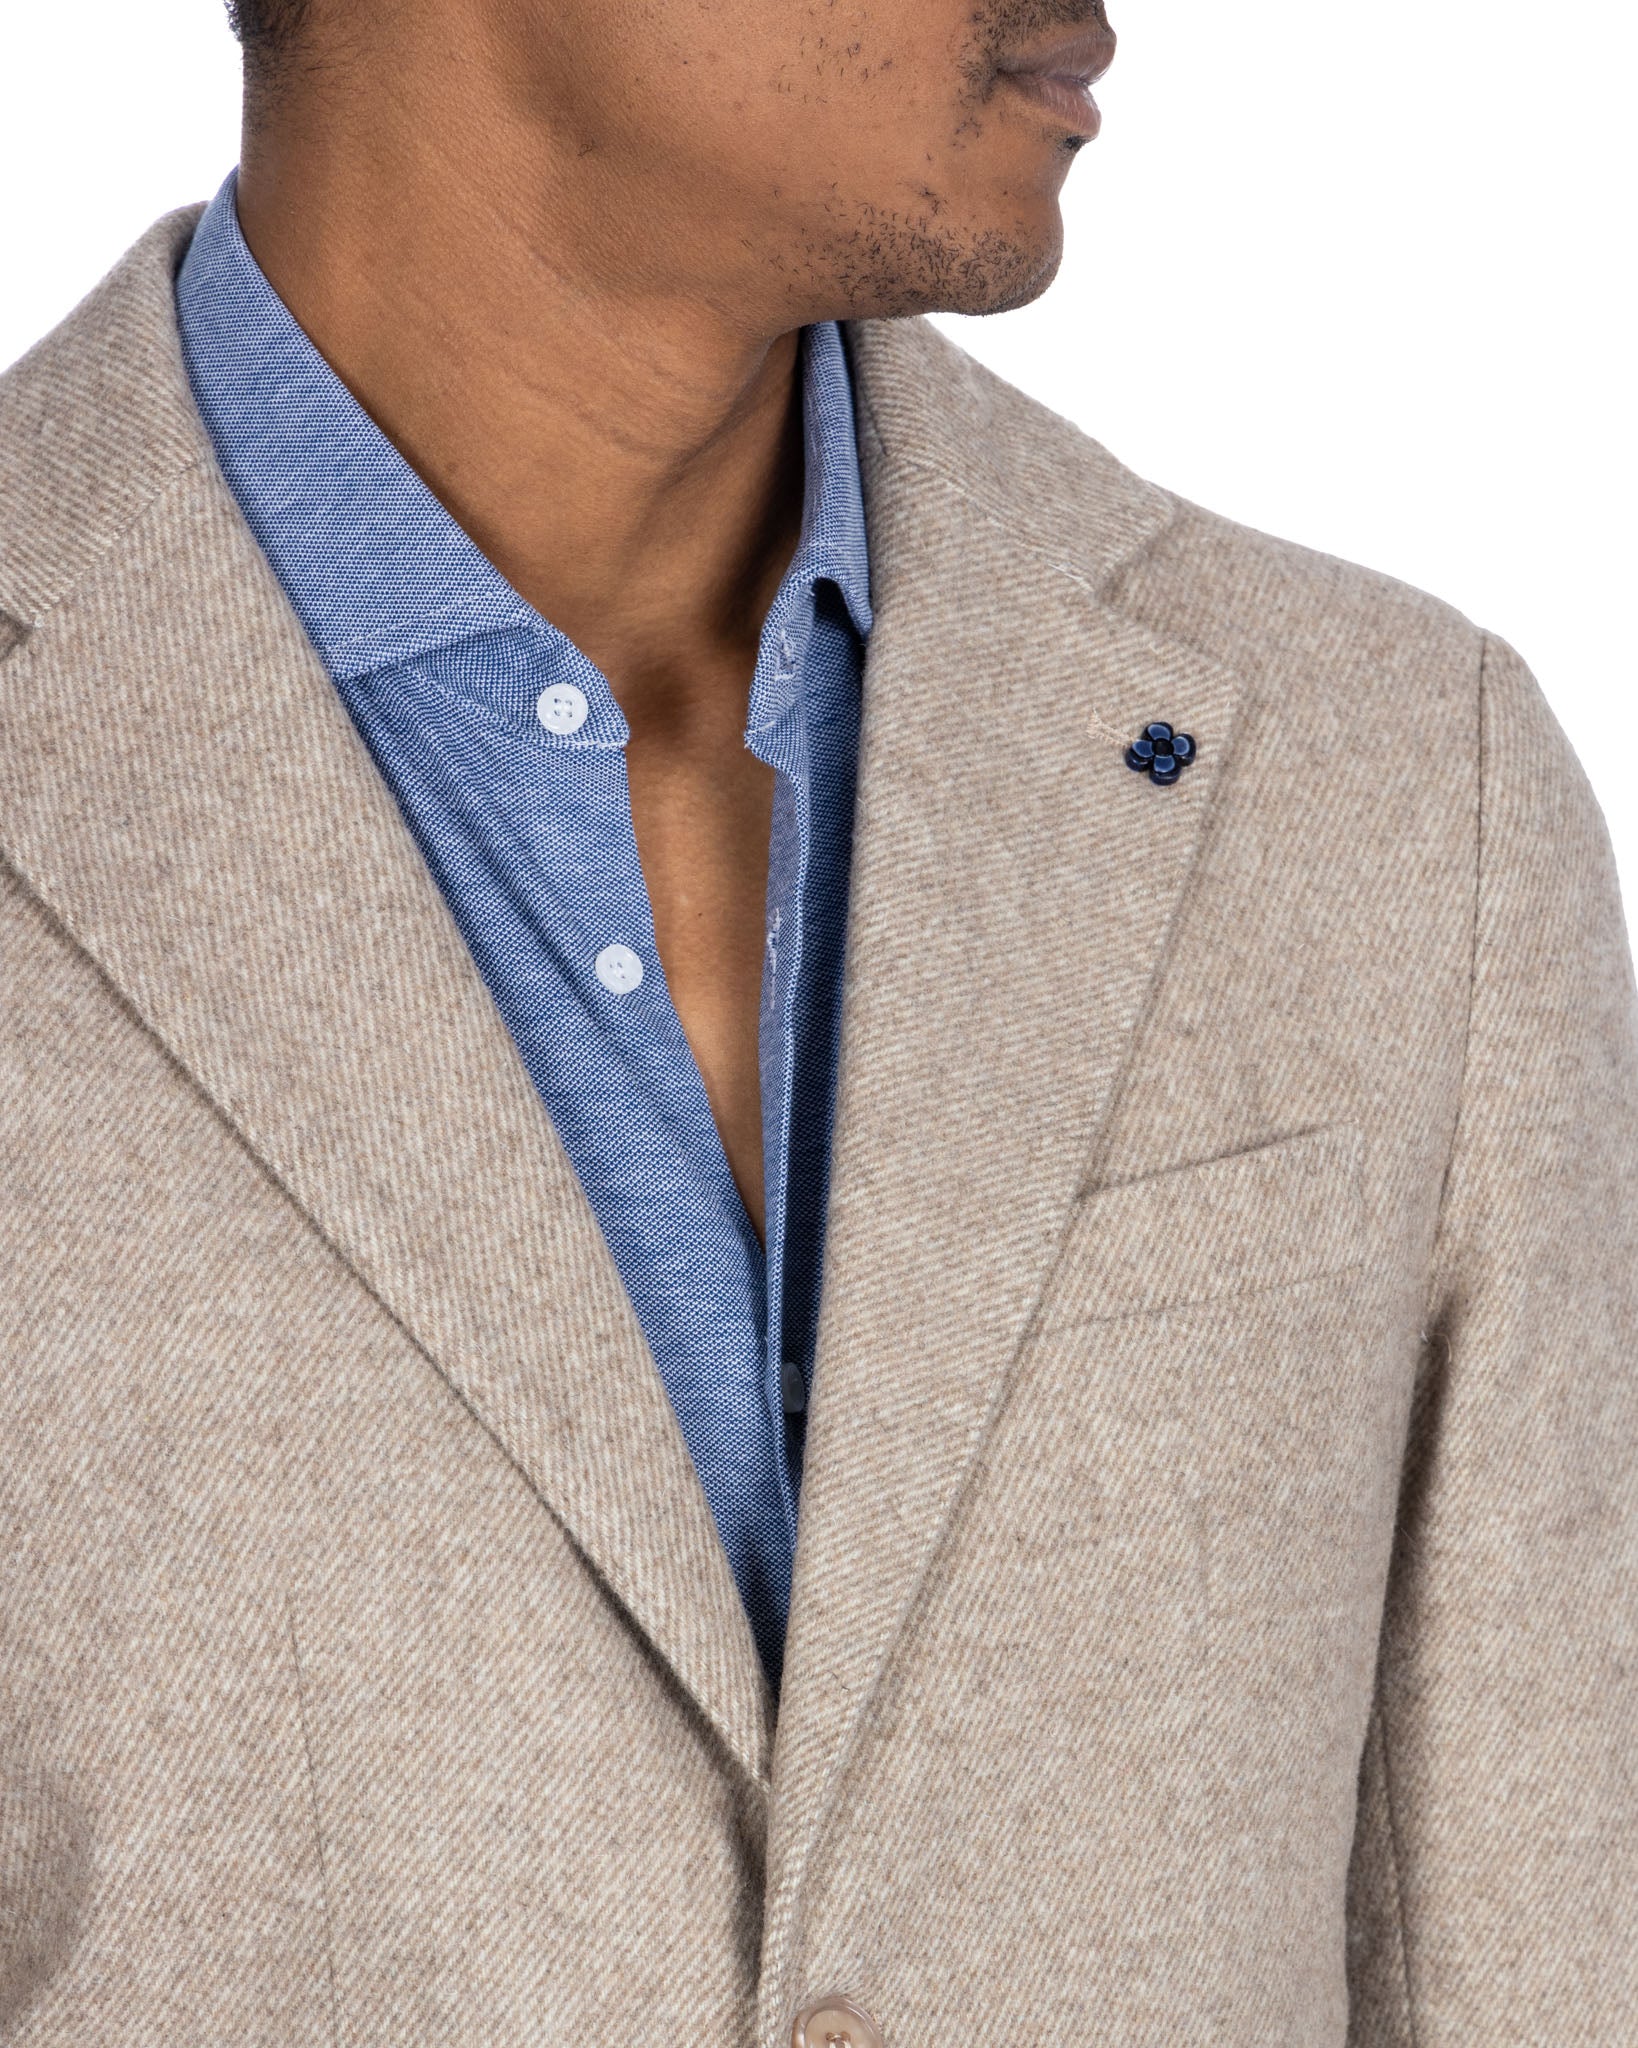 Belluno - beige herringbone weave jacket